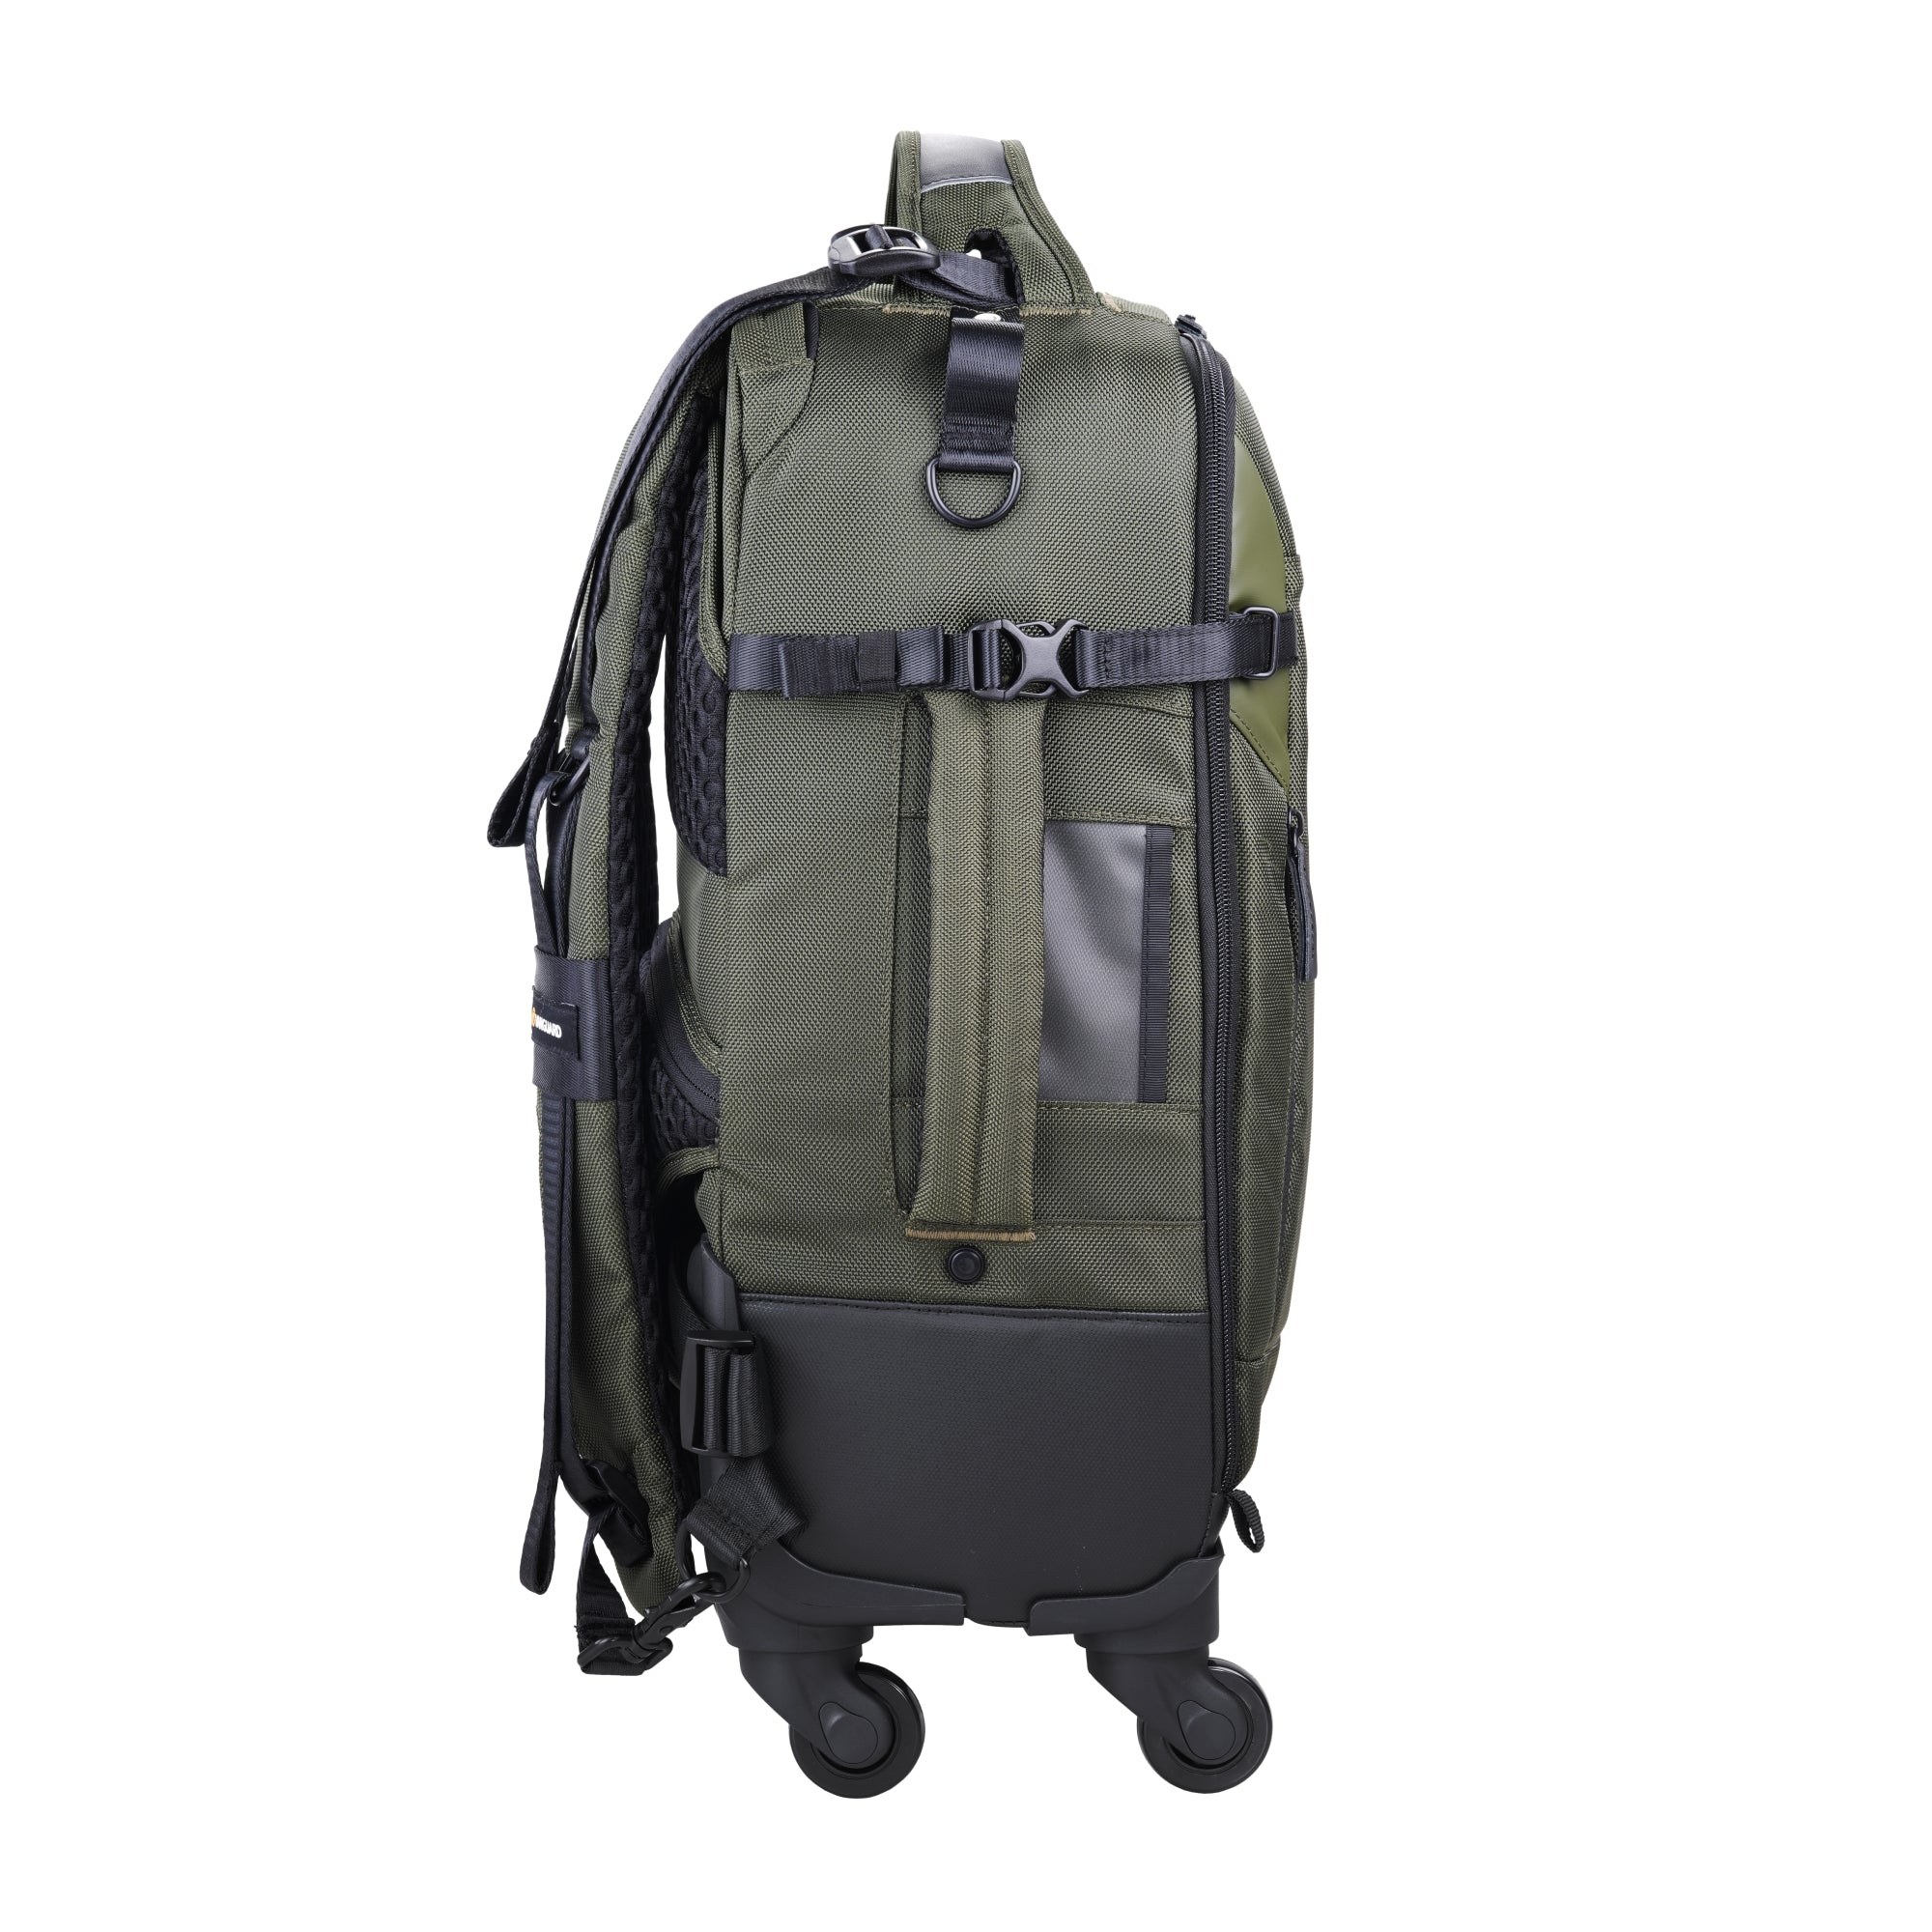 VEO SELECT 55BT GR Trolley Backpack, Green – Vanguard USA